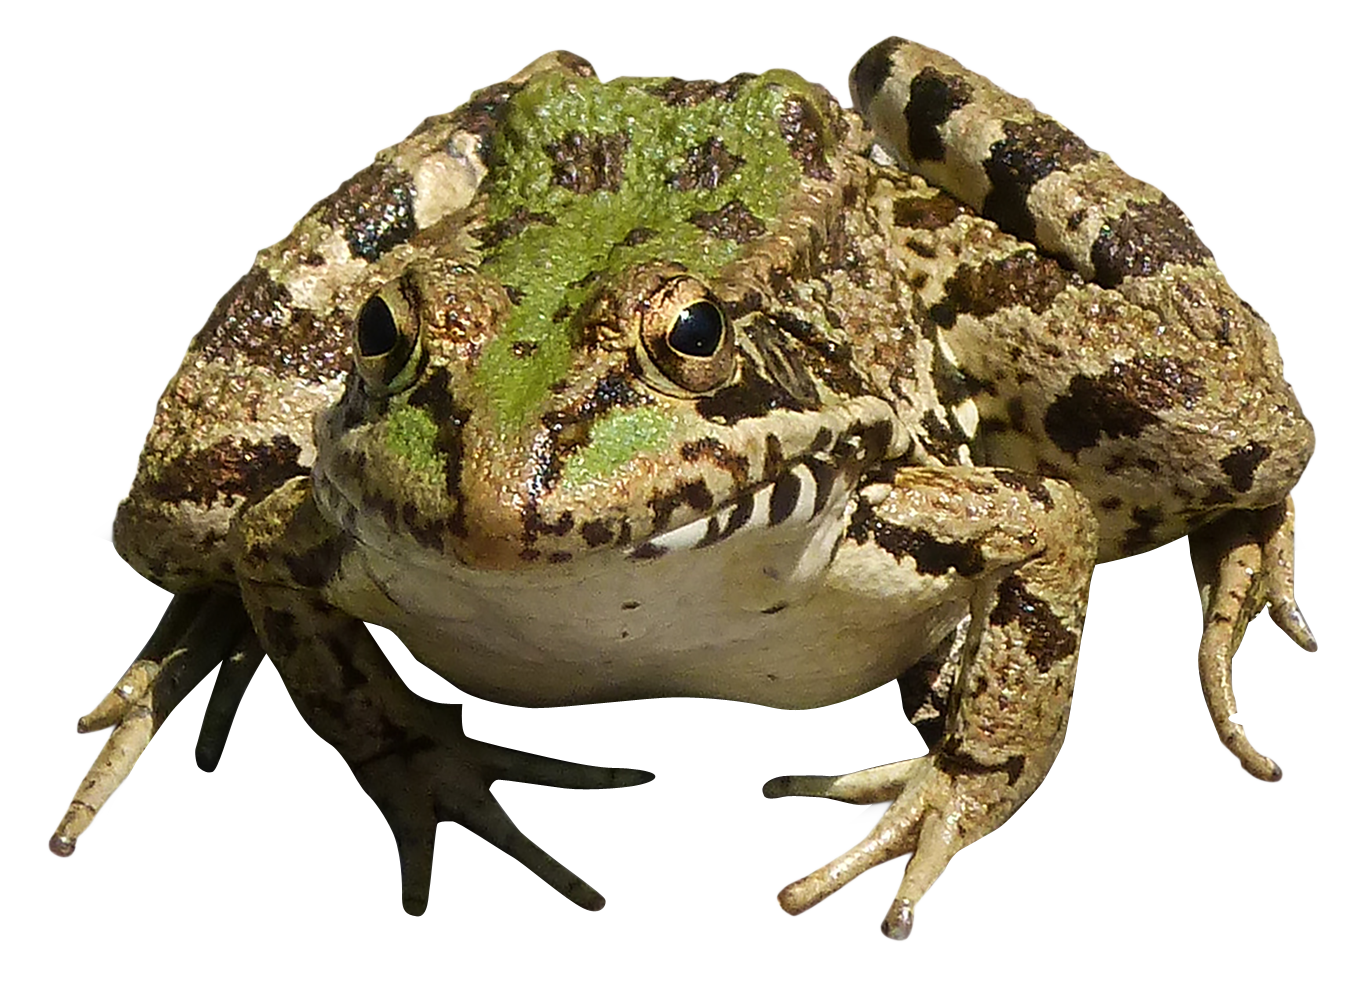 Amphibian Frog HQ Image Free PNG Image